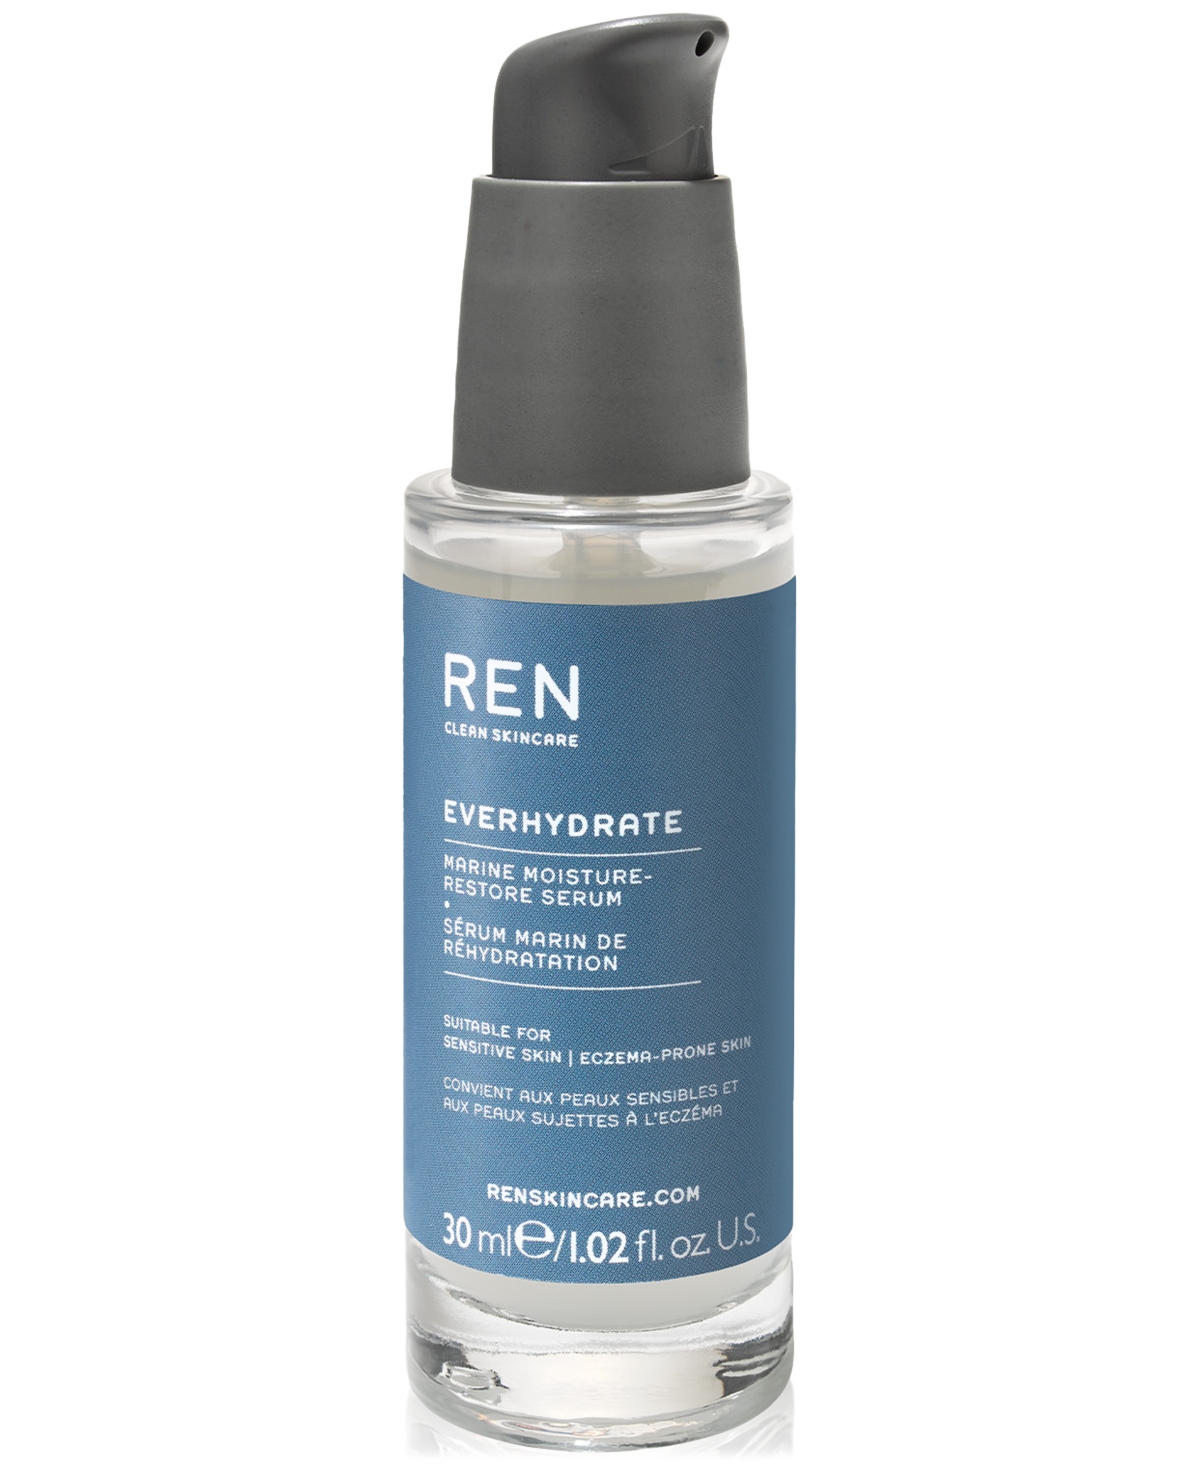 Ren Clean Skincare Everhydrate Marine Moisture-restore Serum, 1.02 Oz.